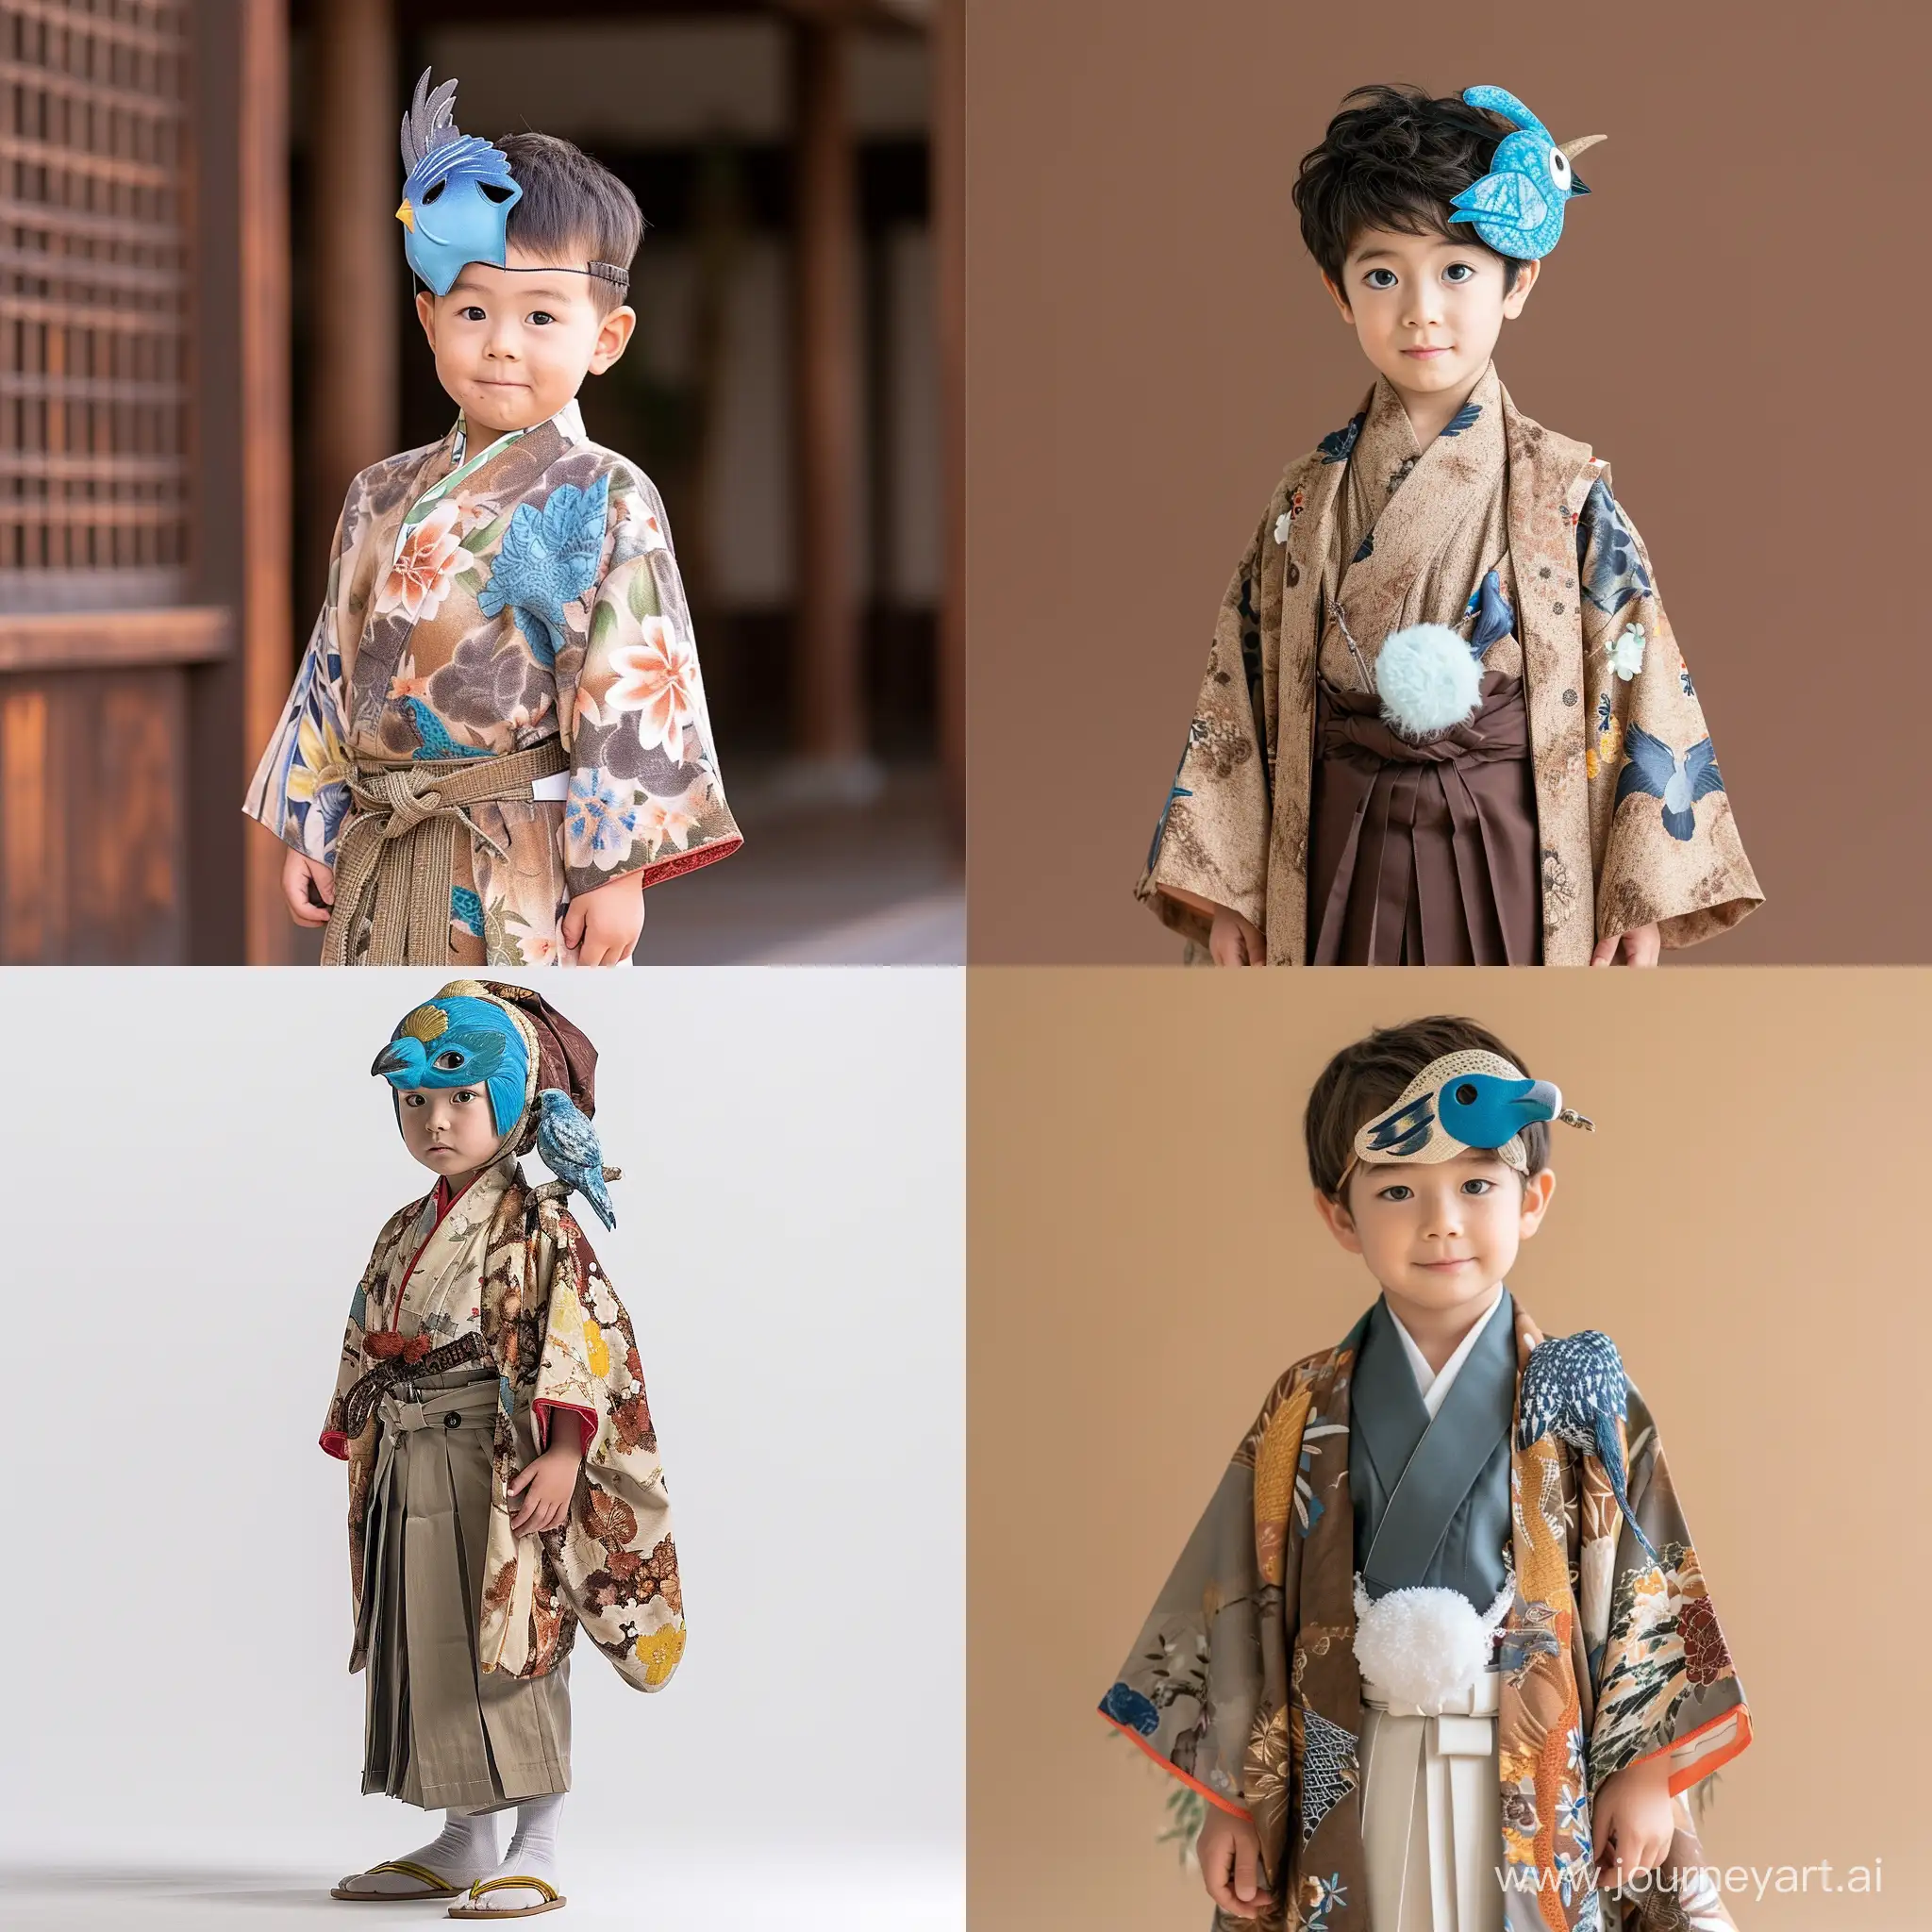 Cute boy, Tengu yokai, blue bird mask on side of head, kimono with Hakama pants, geta shoes, best quality, perfect face, perfect hands